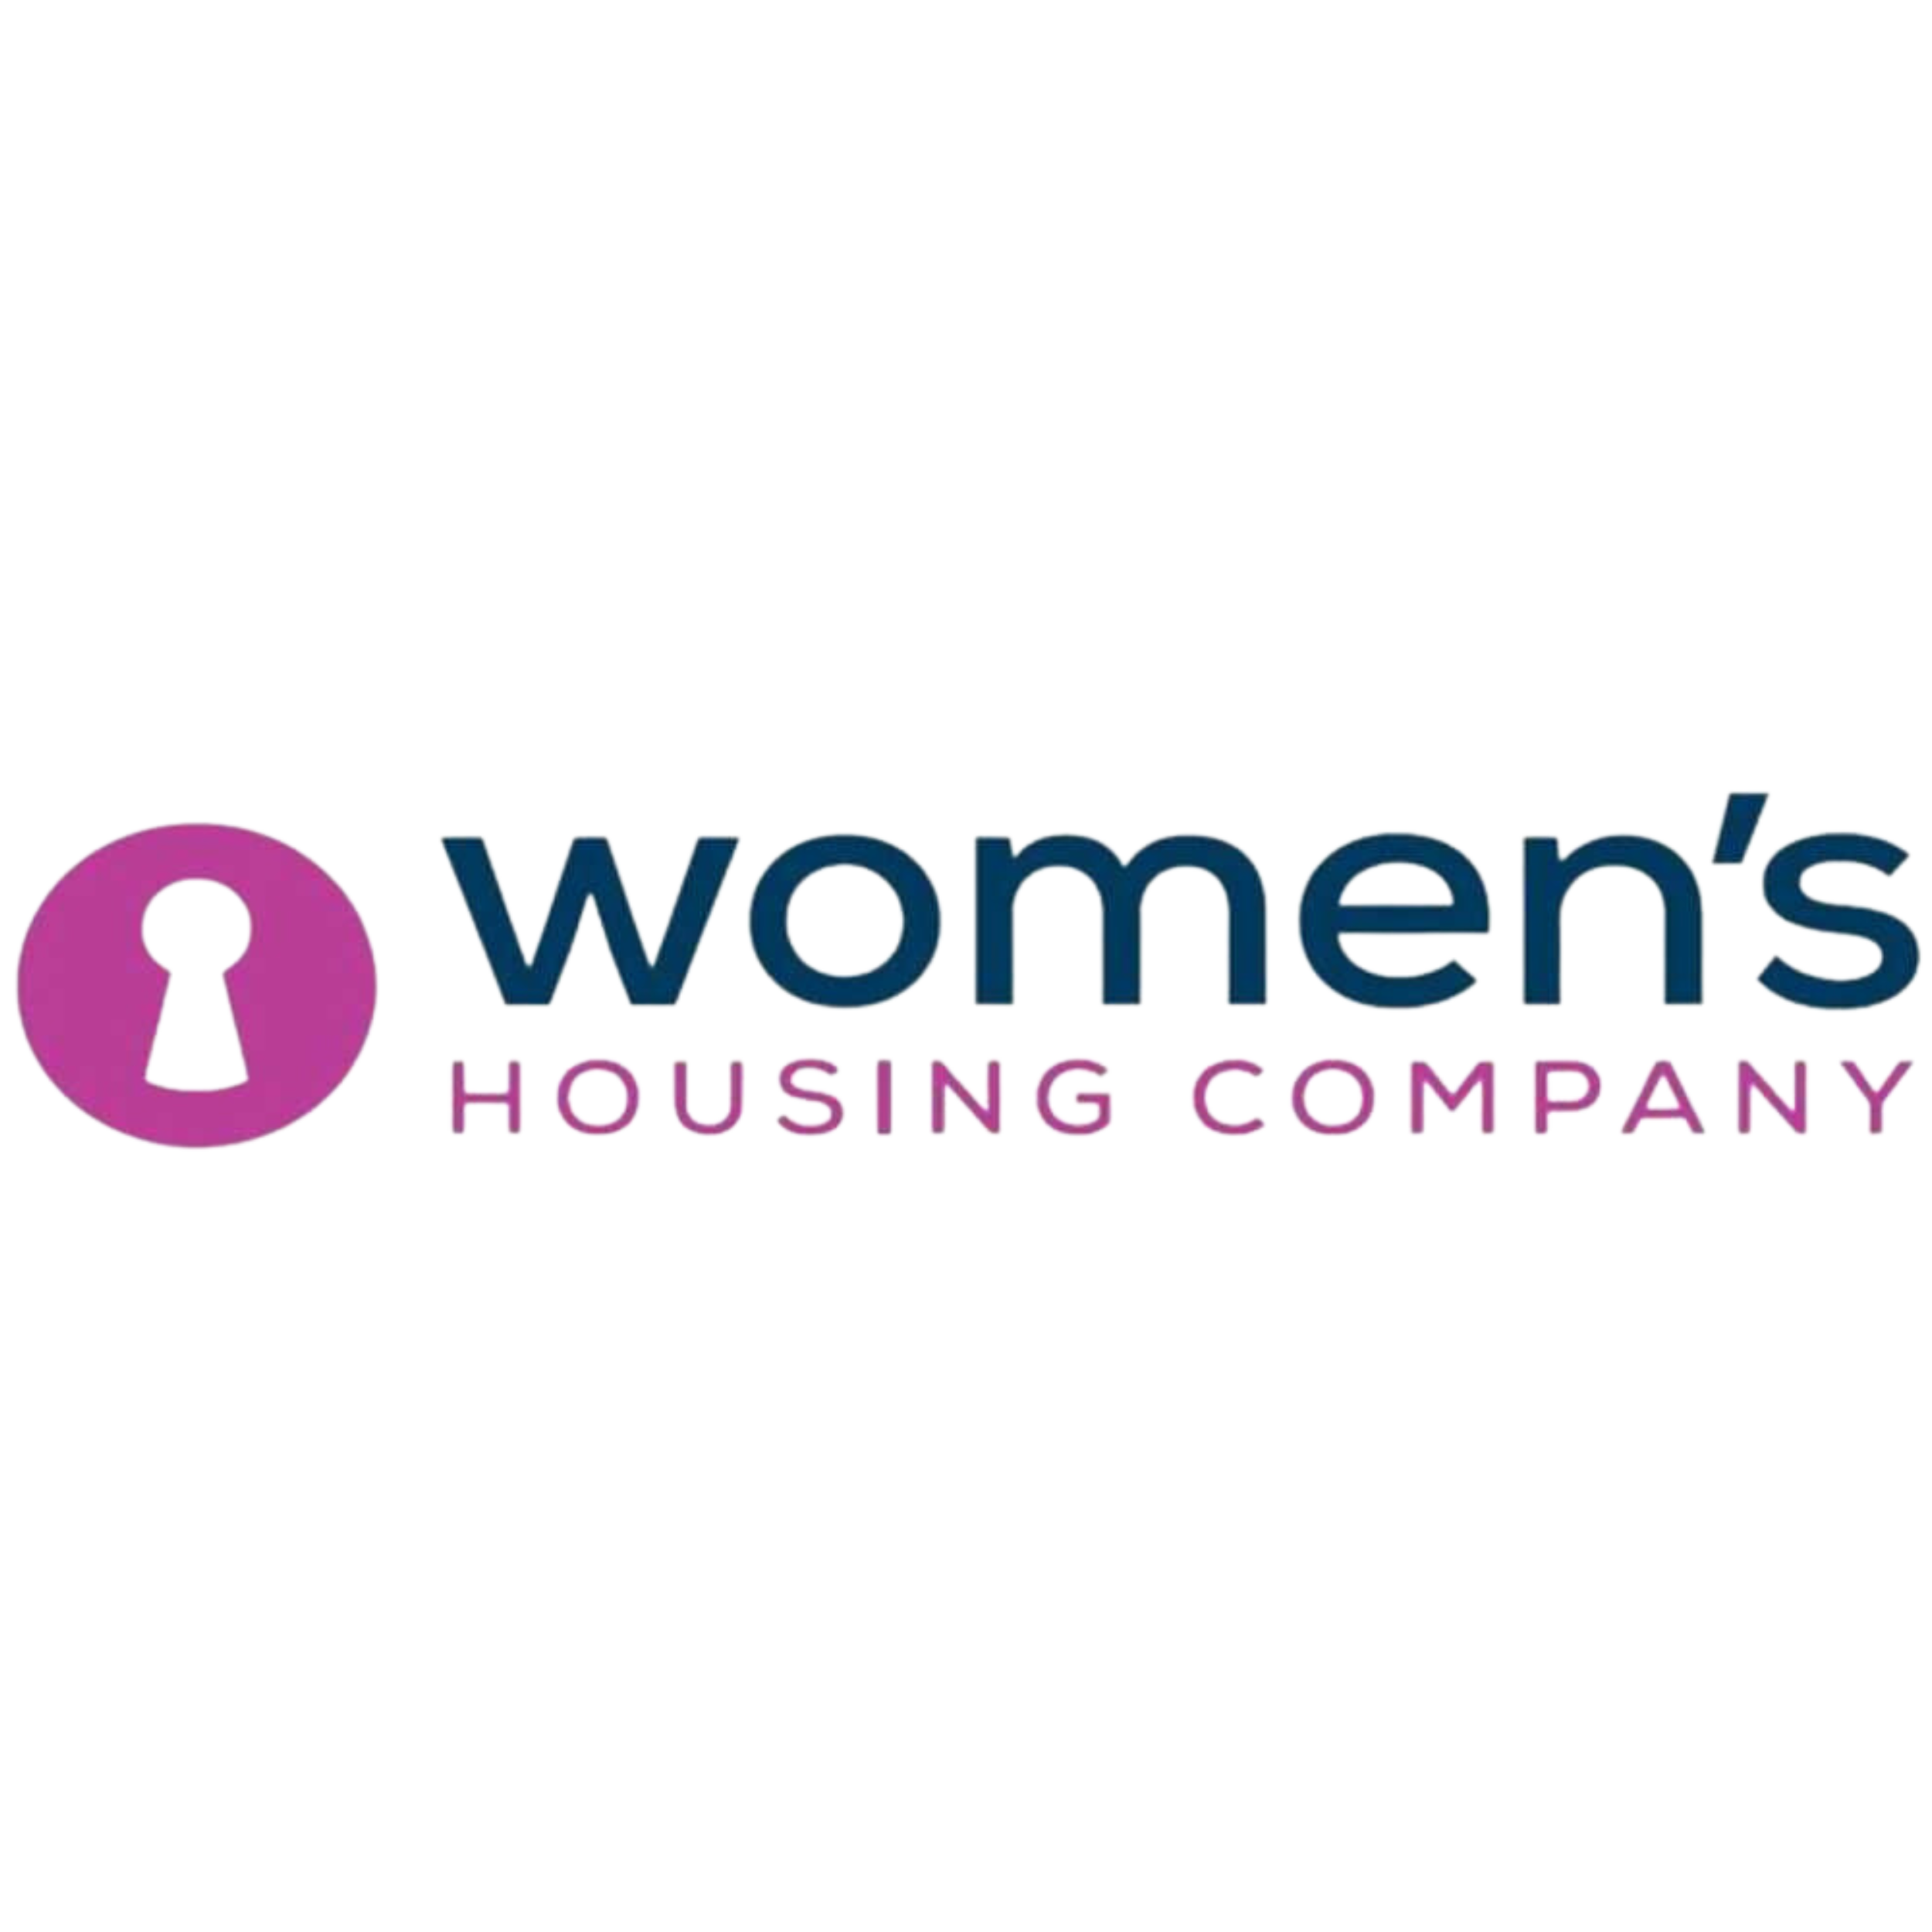 Women's Housing Company : Brand Short Description Type Here.